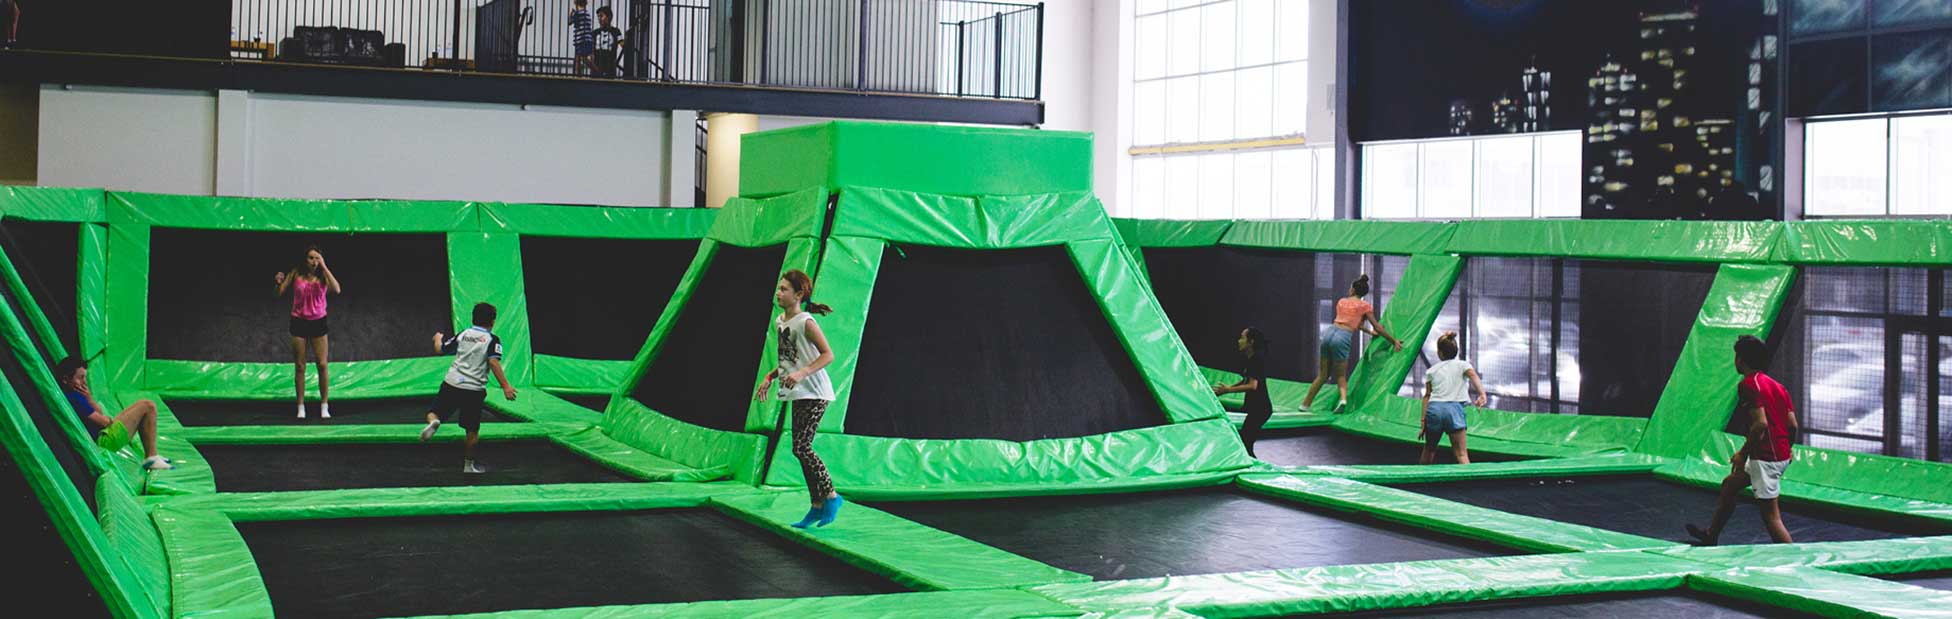 Kids jumping around on trampolines inside an indoor playground